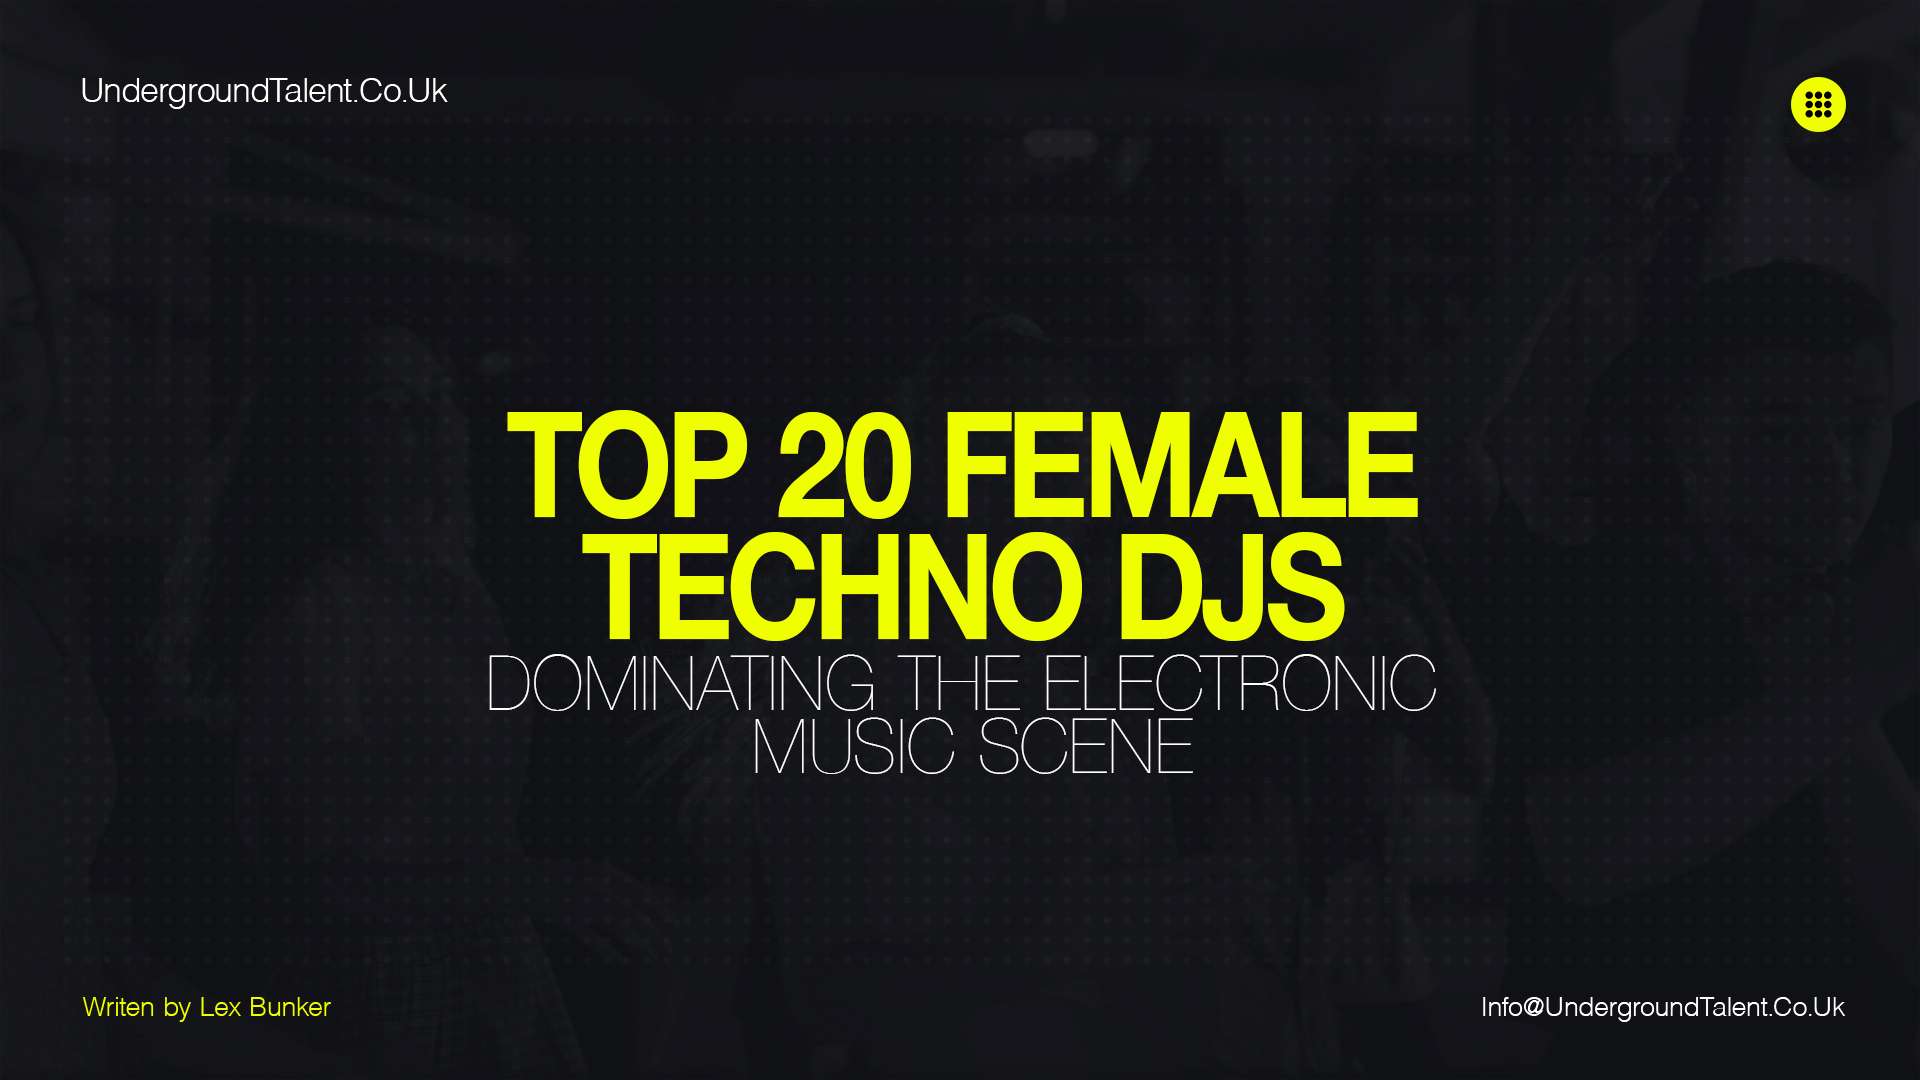 Top 20 Female Techno DJs Dominating the Electronic Music Scene